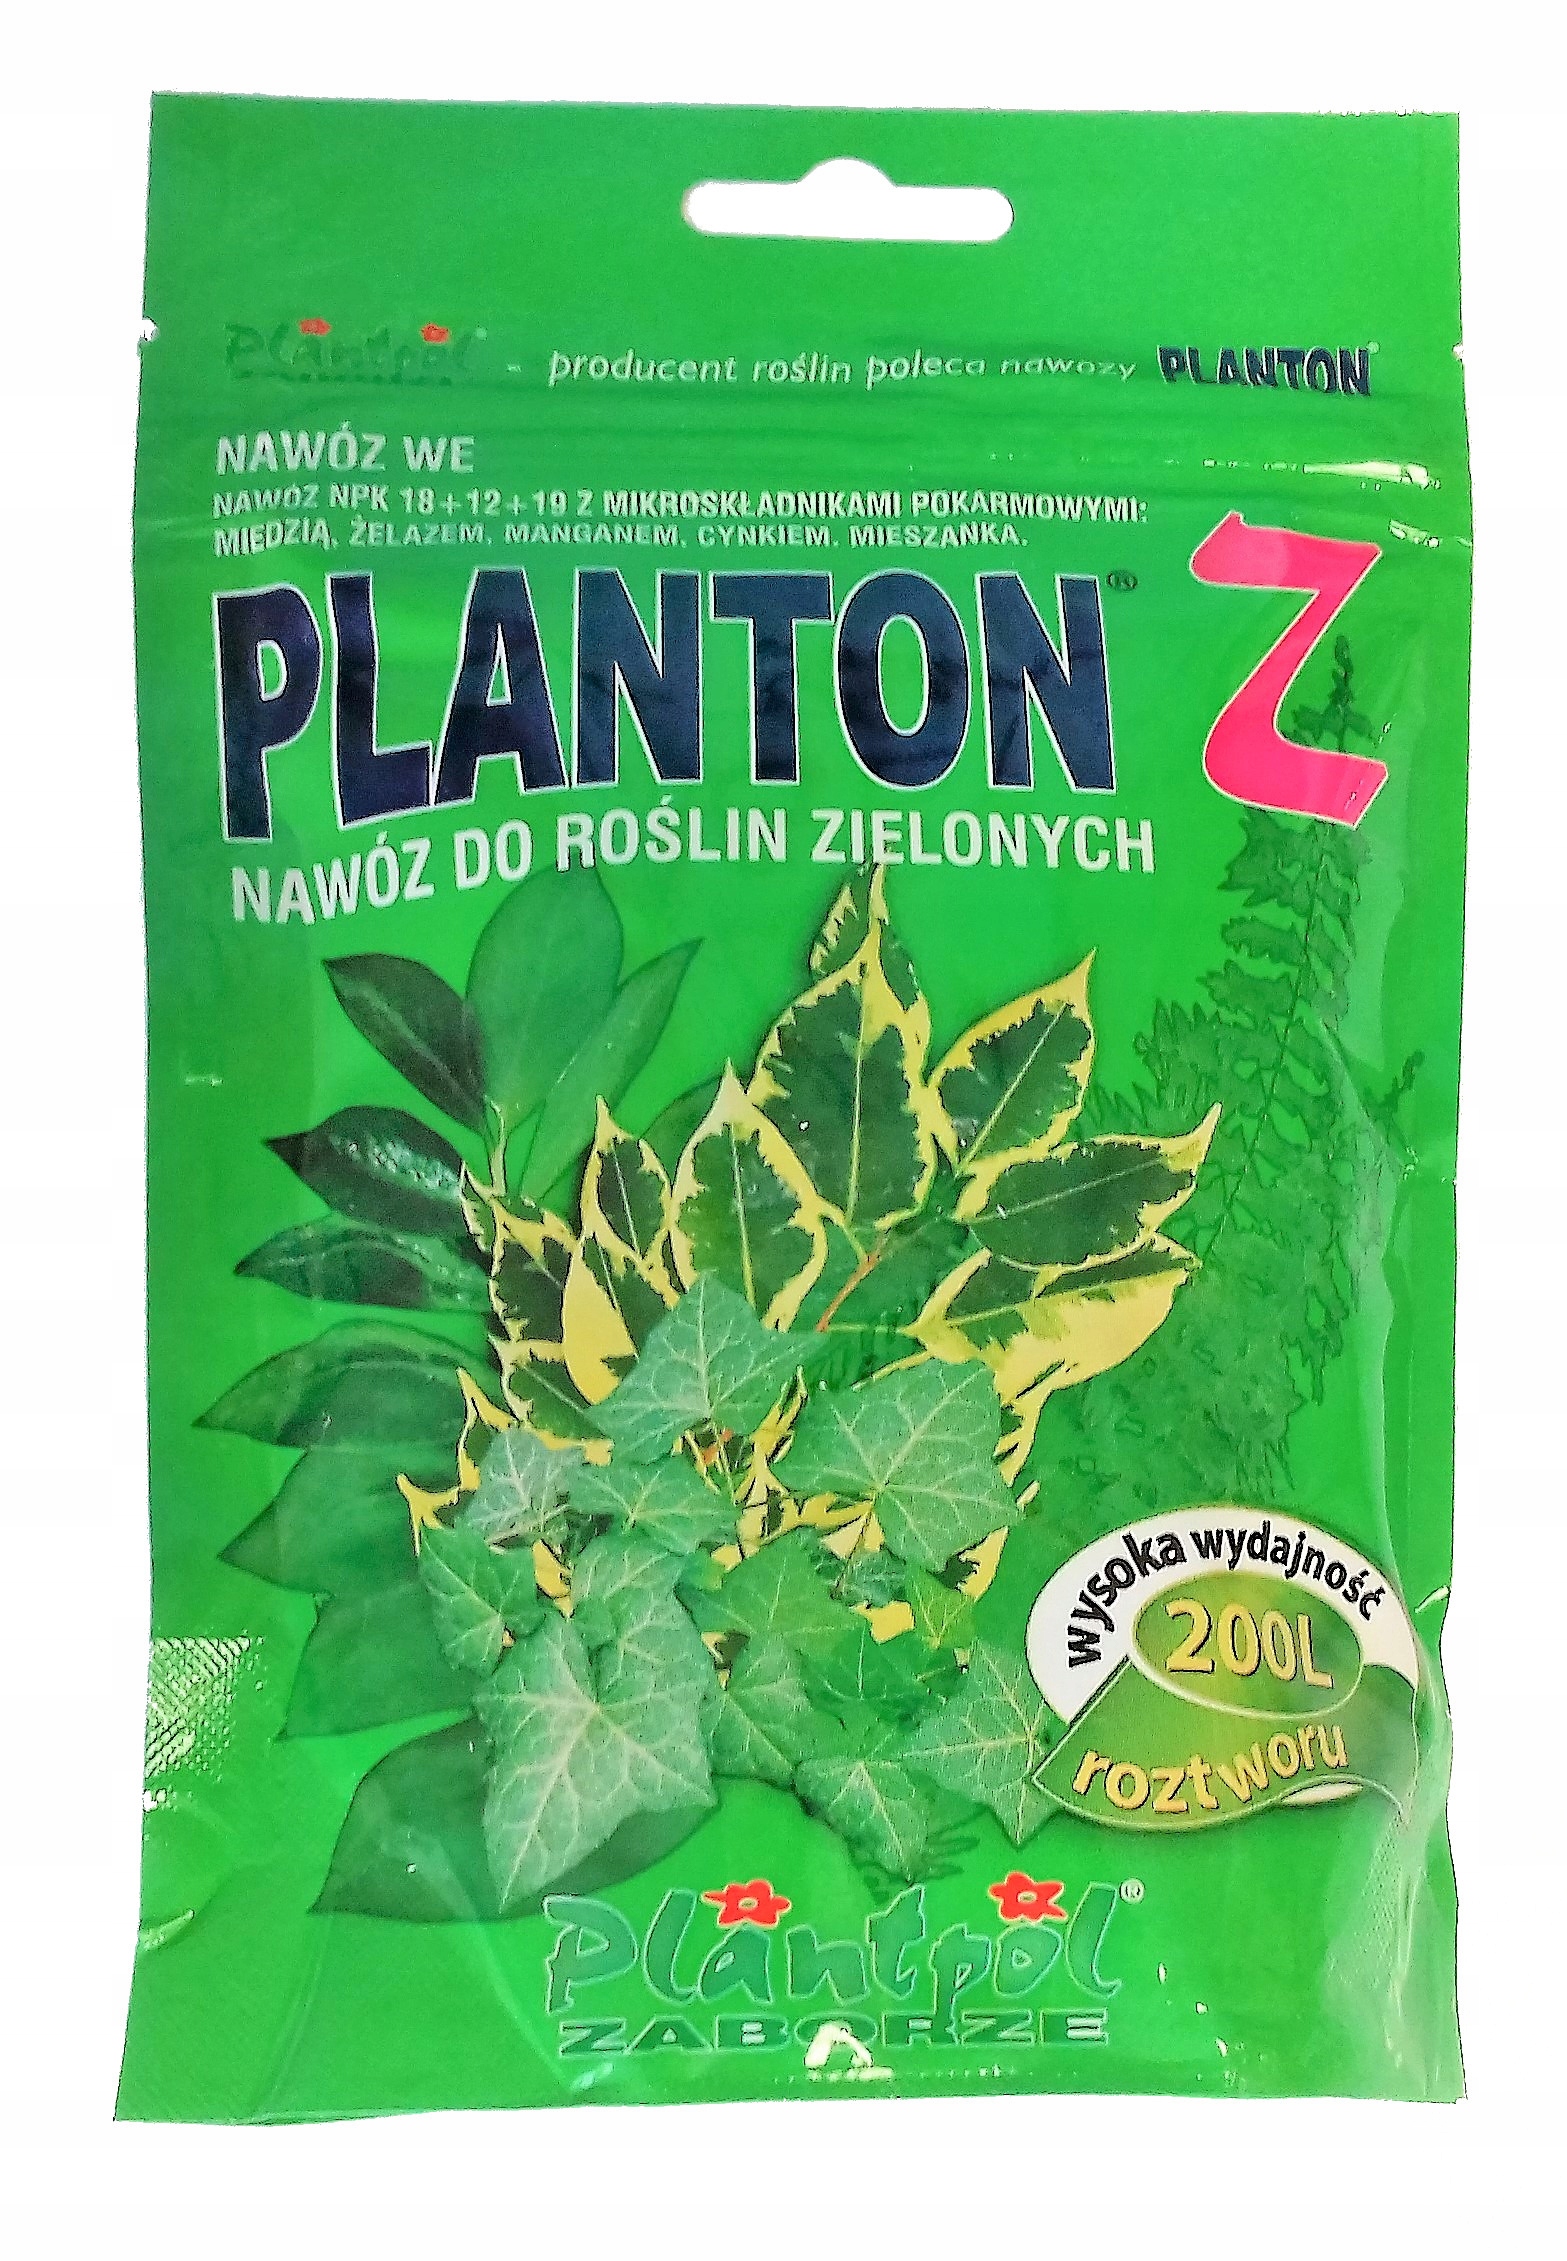 Плантон. Planton удобрение. Удобрения planton логотип. Удобрение GSN 2004. Planton 420.